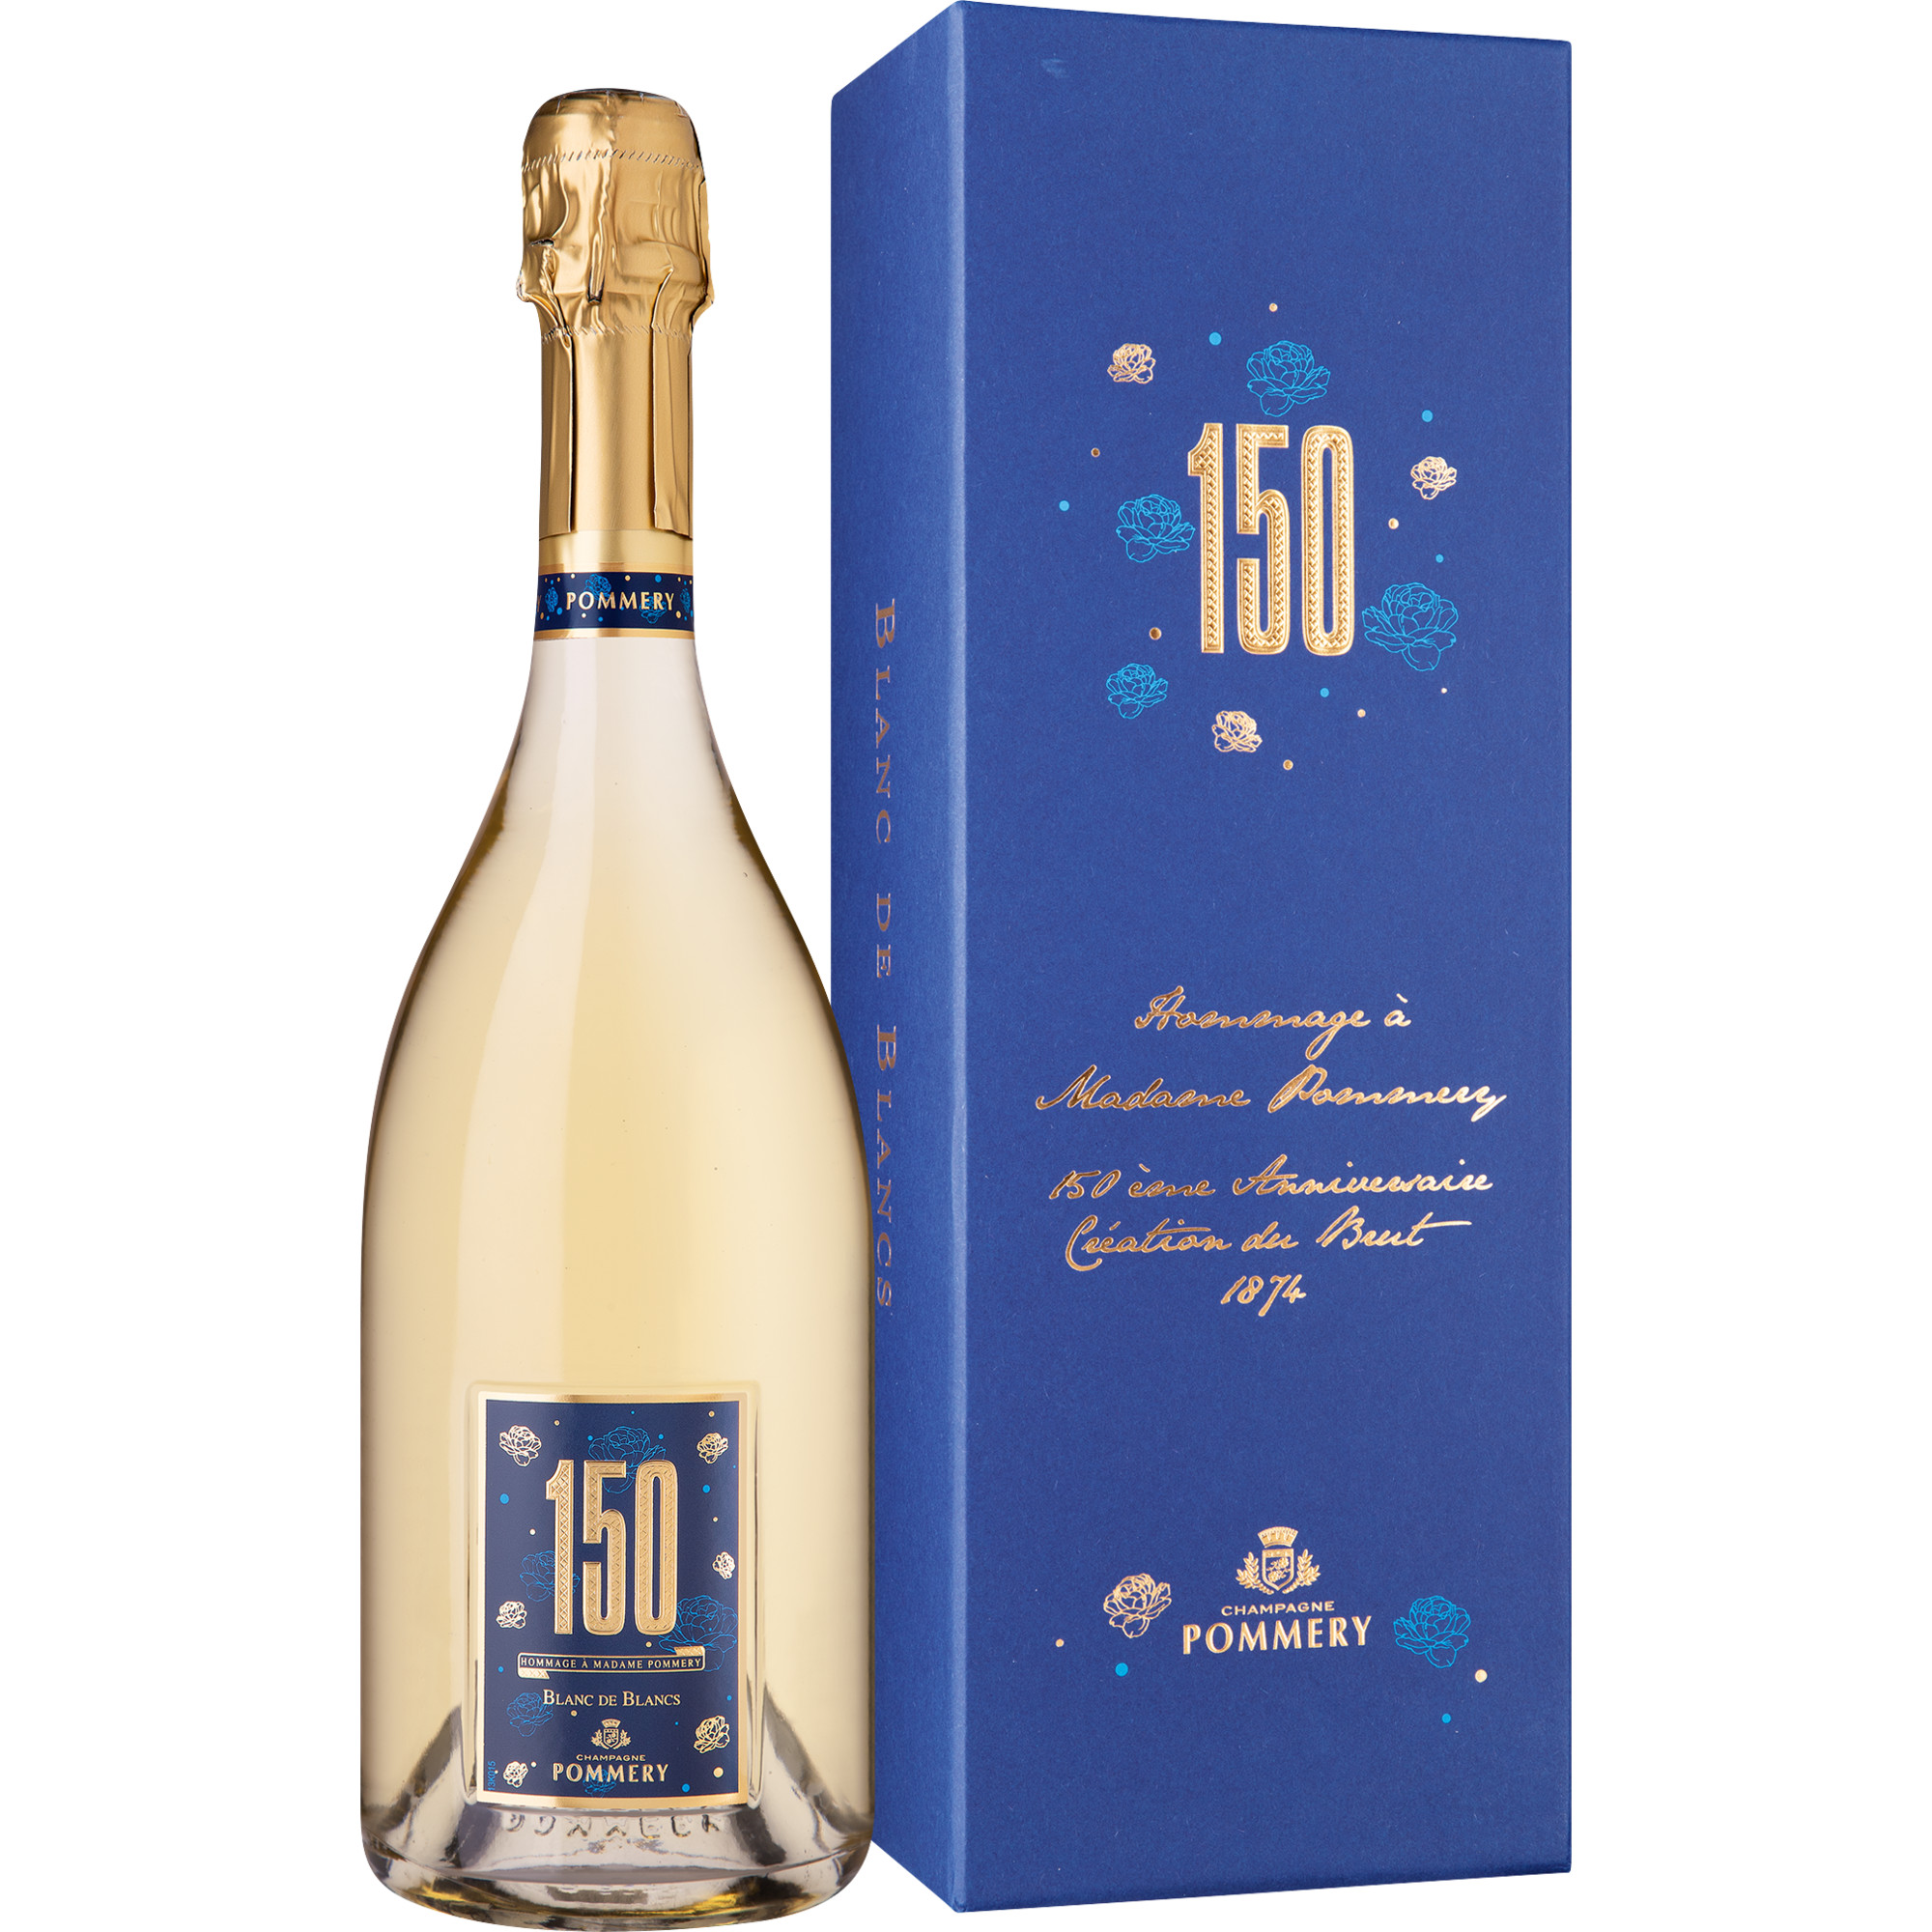 Champagne Pommery 150